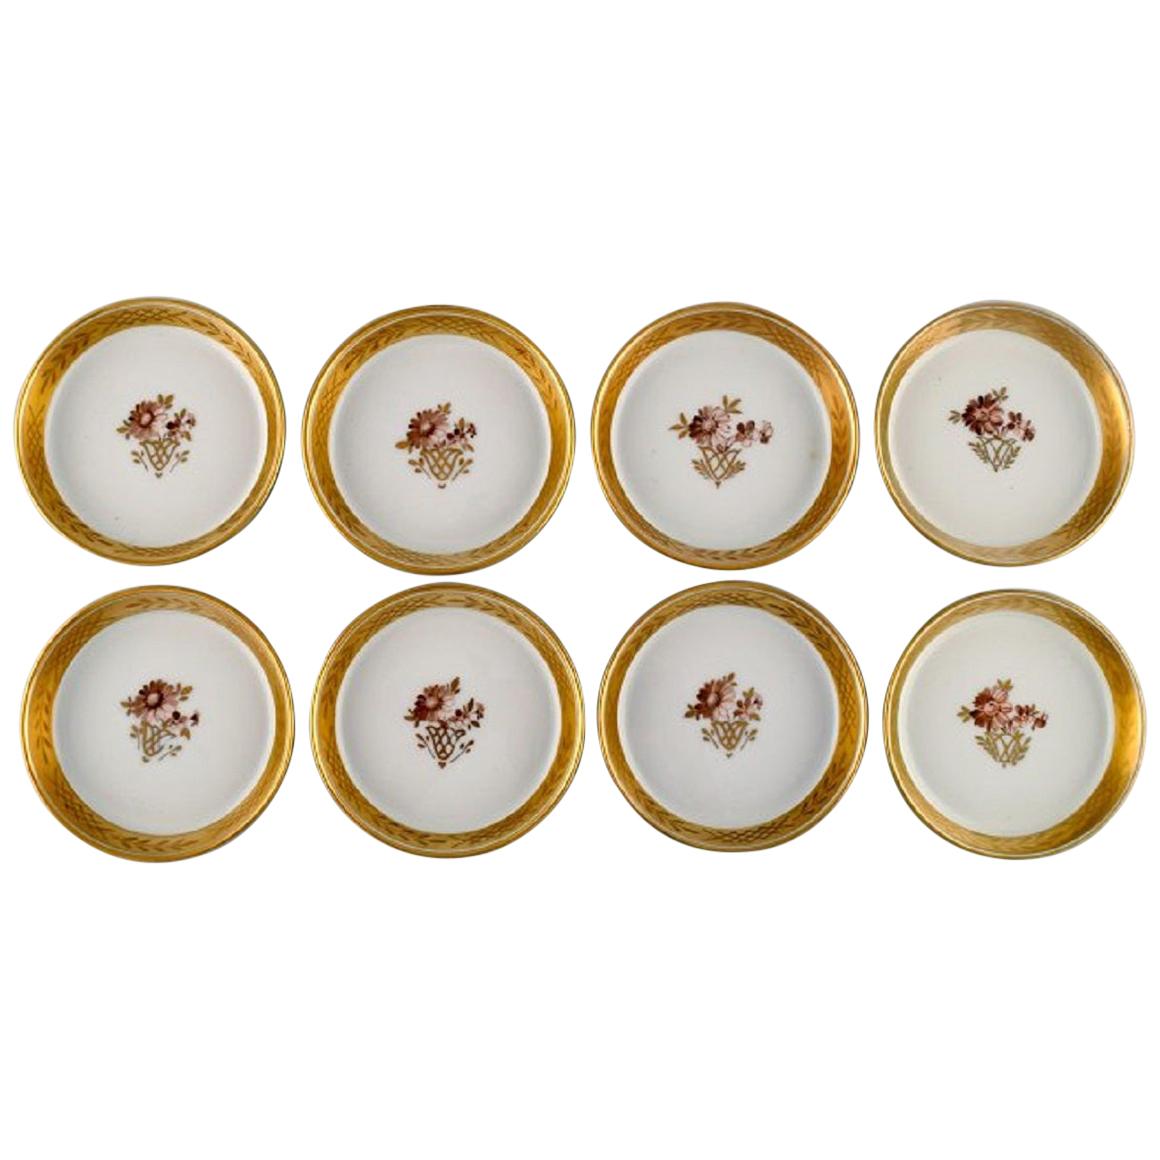 Eight Royal Copenhagen Golden Basket Coasters in Porcelain with Gold Edge